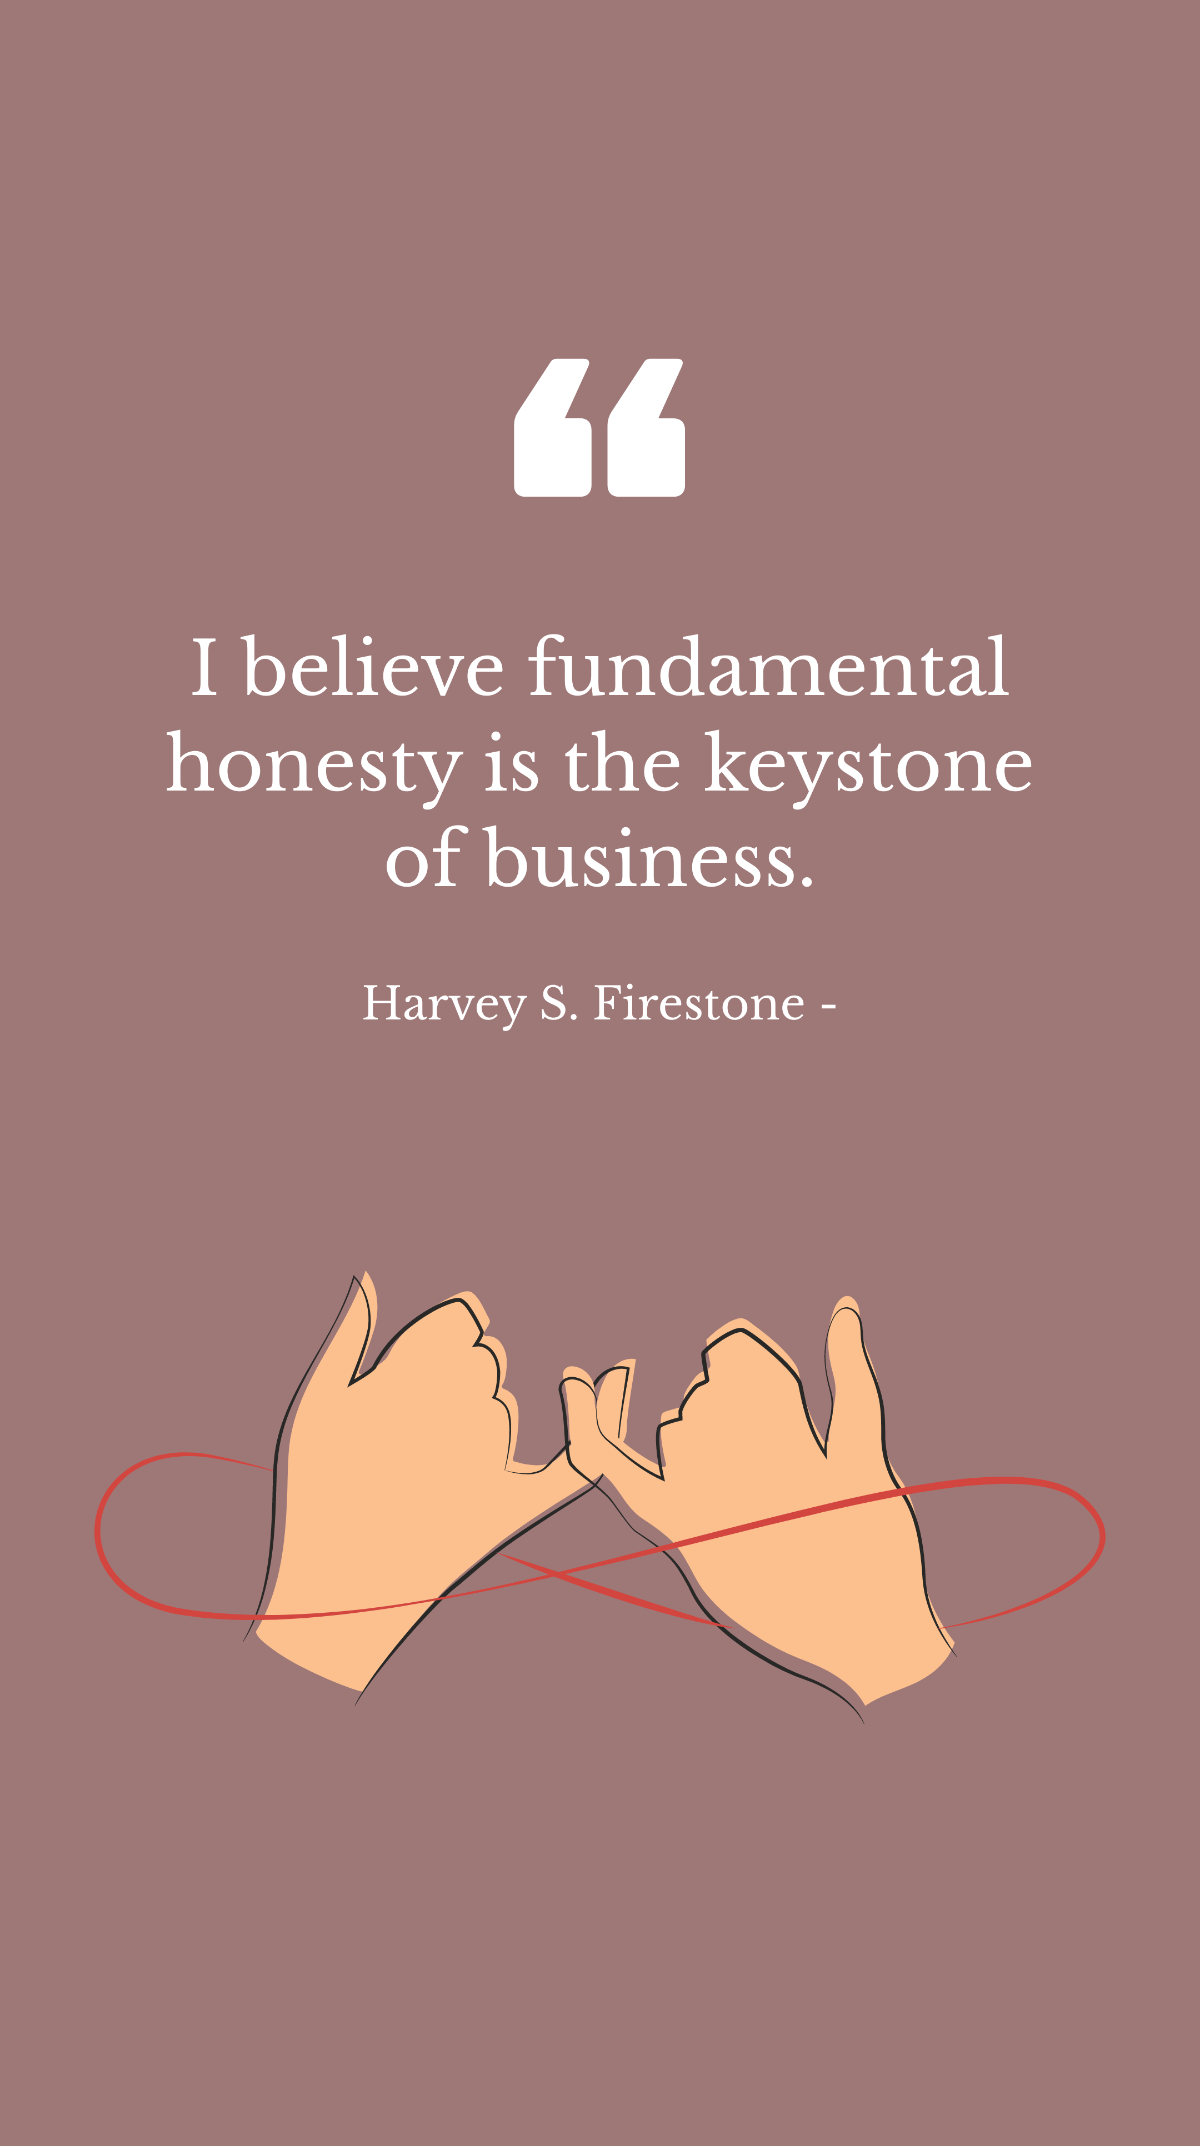 Free Harvey S. Firestone - I believe fundamental honesty is the keystone of business. Template